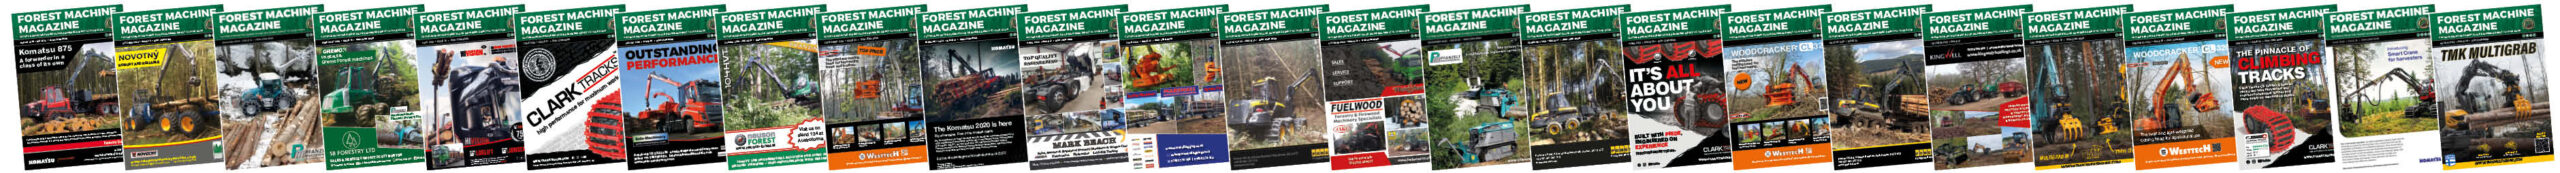 Forest Machine Magazine Web Store